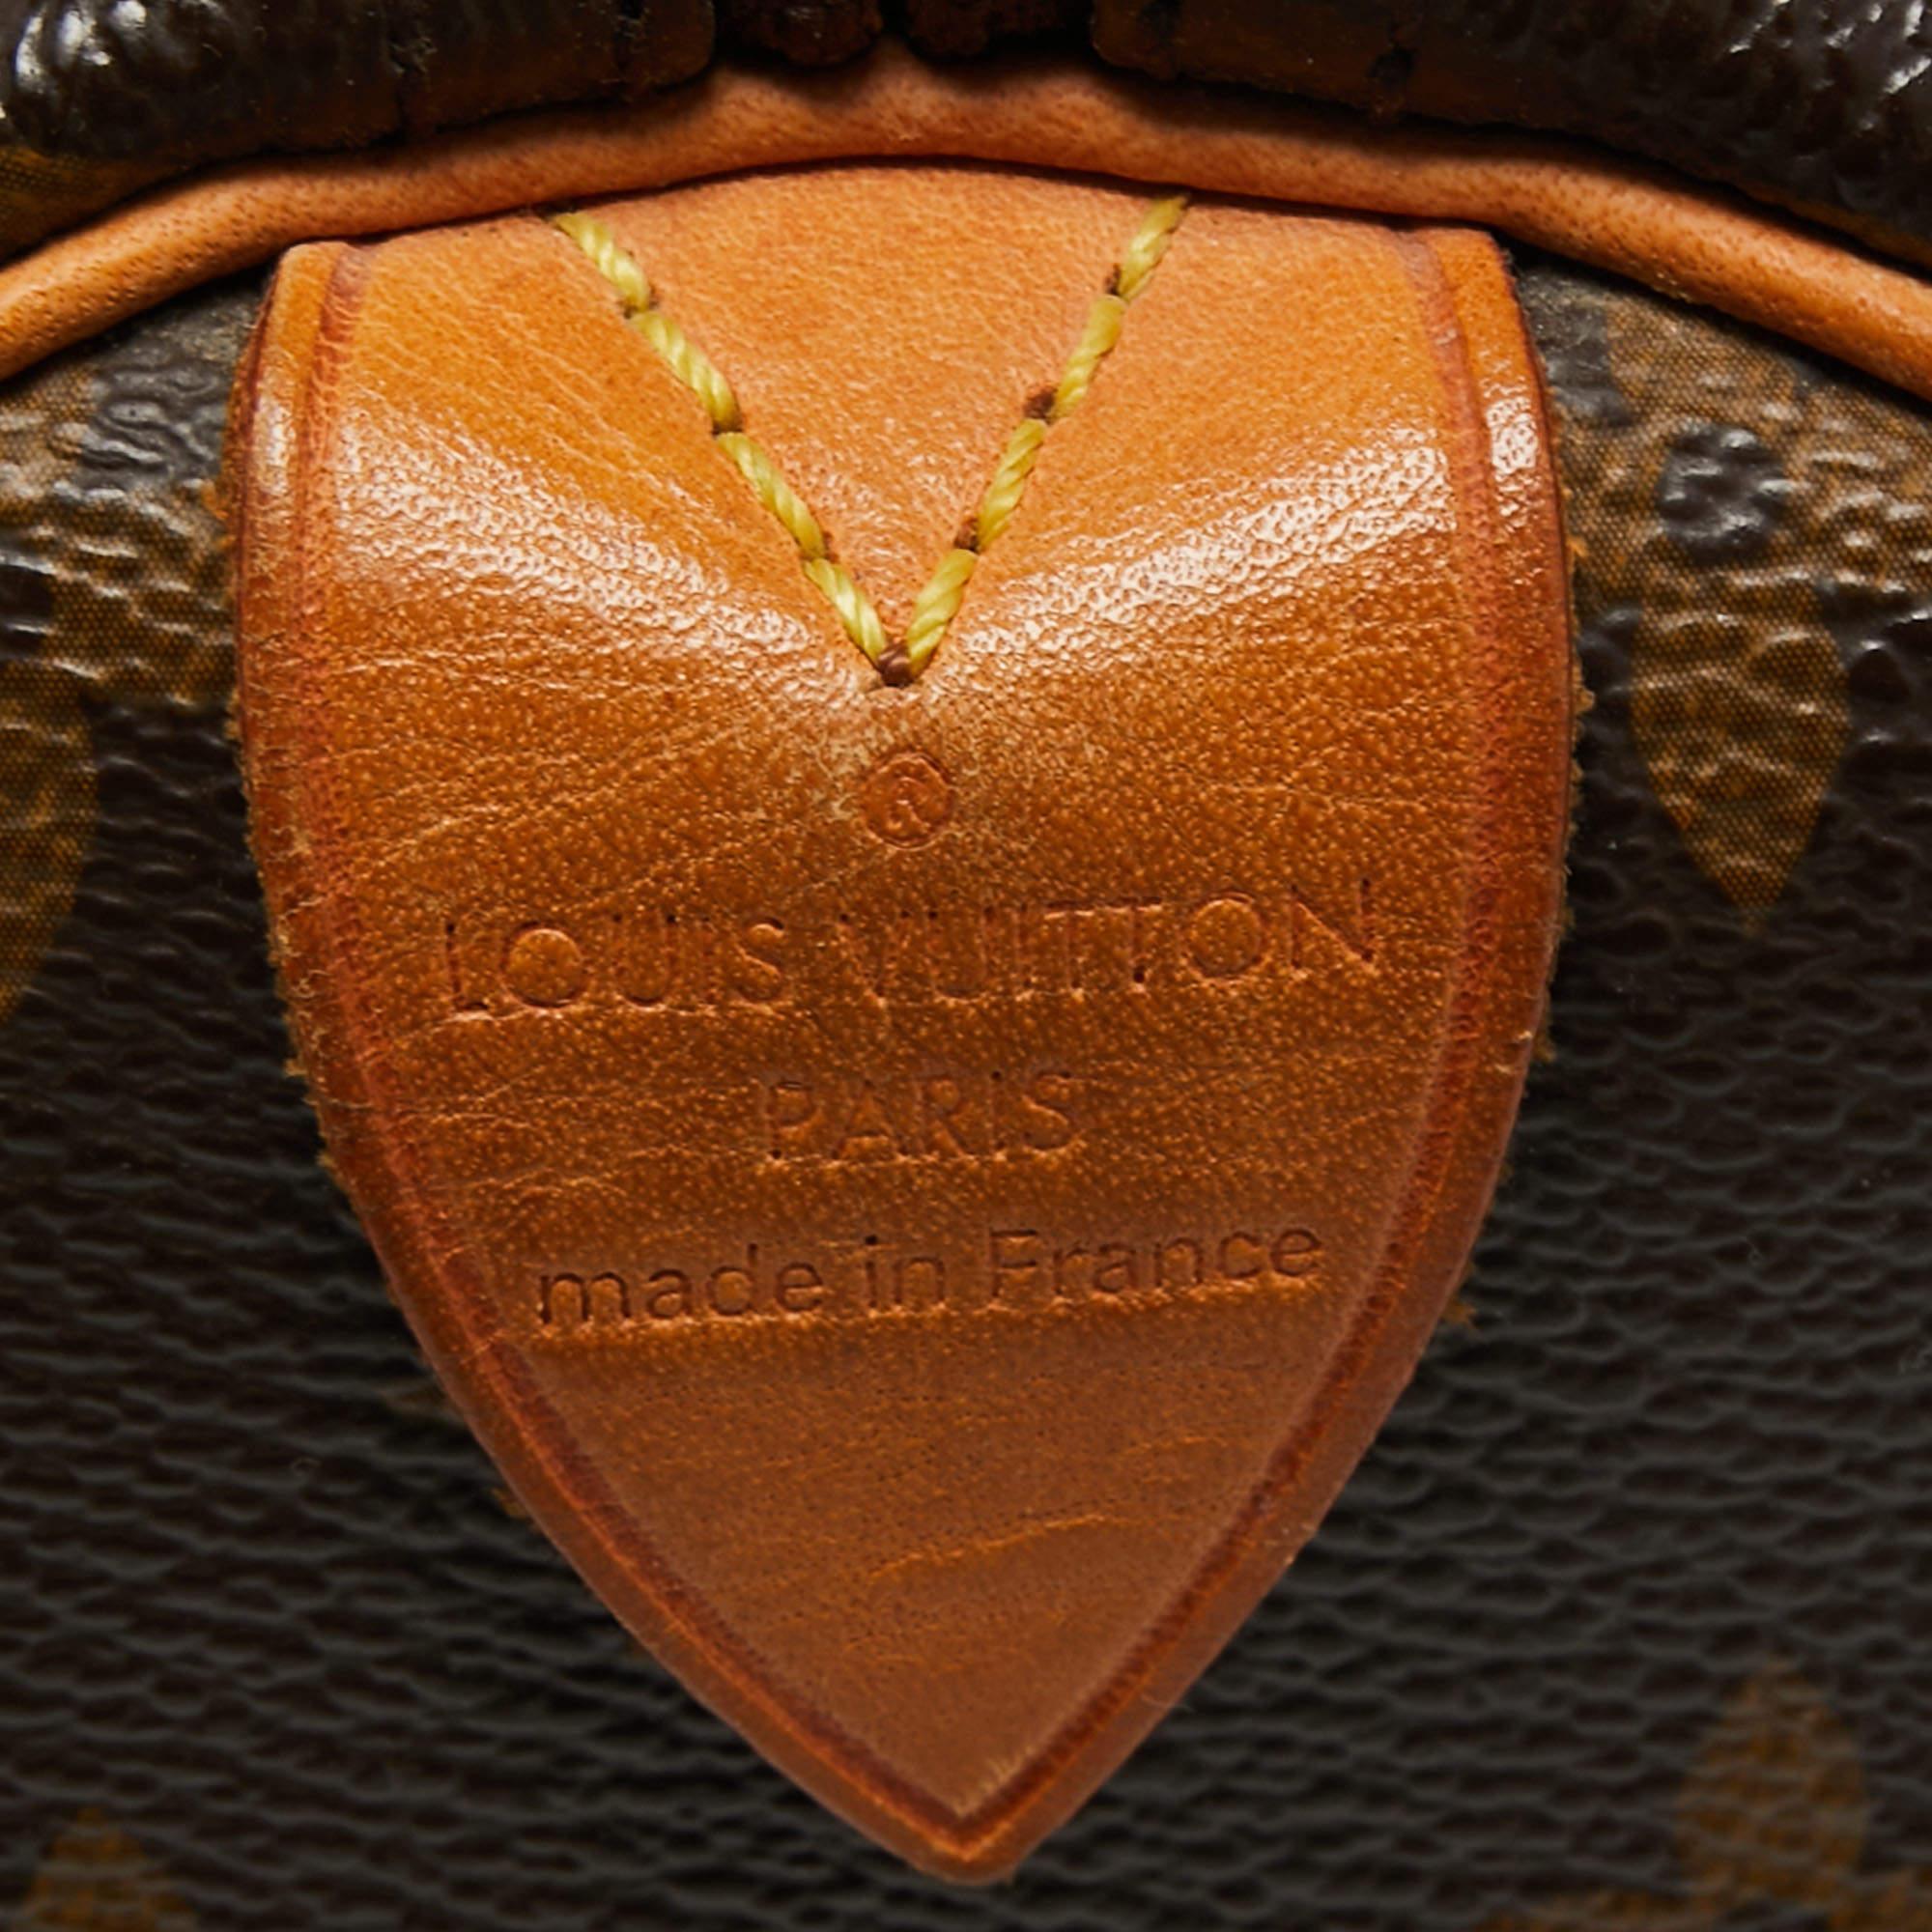 Louis Vuitton Monogram Canvas Speedy 30 Bag 4